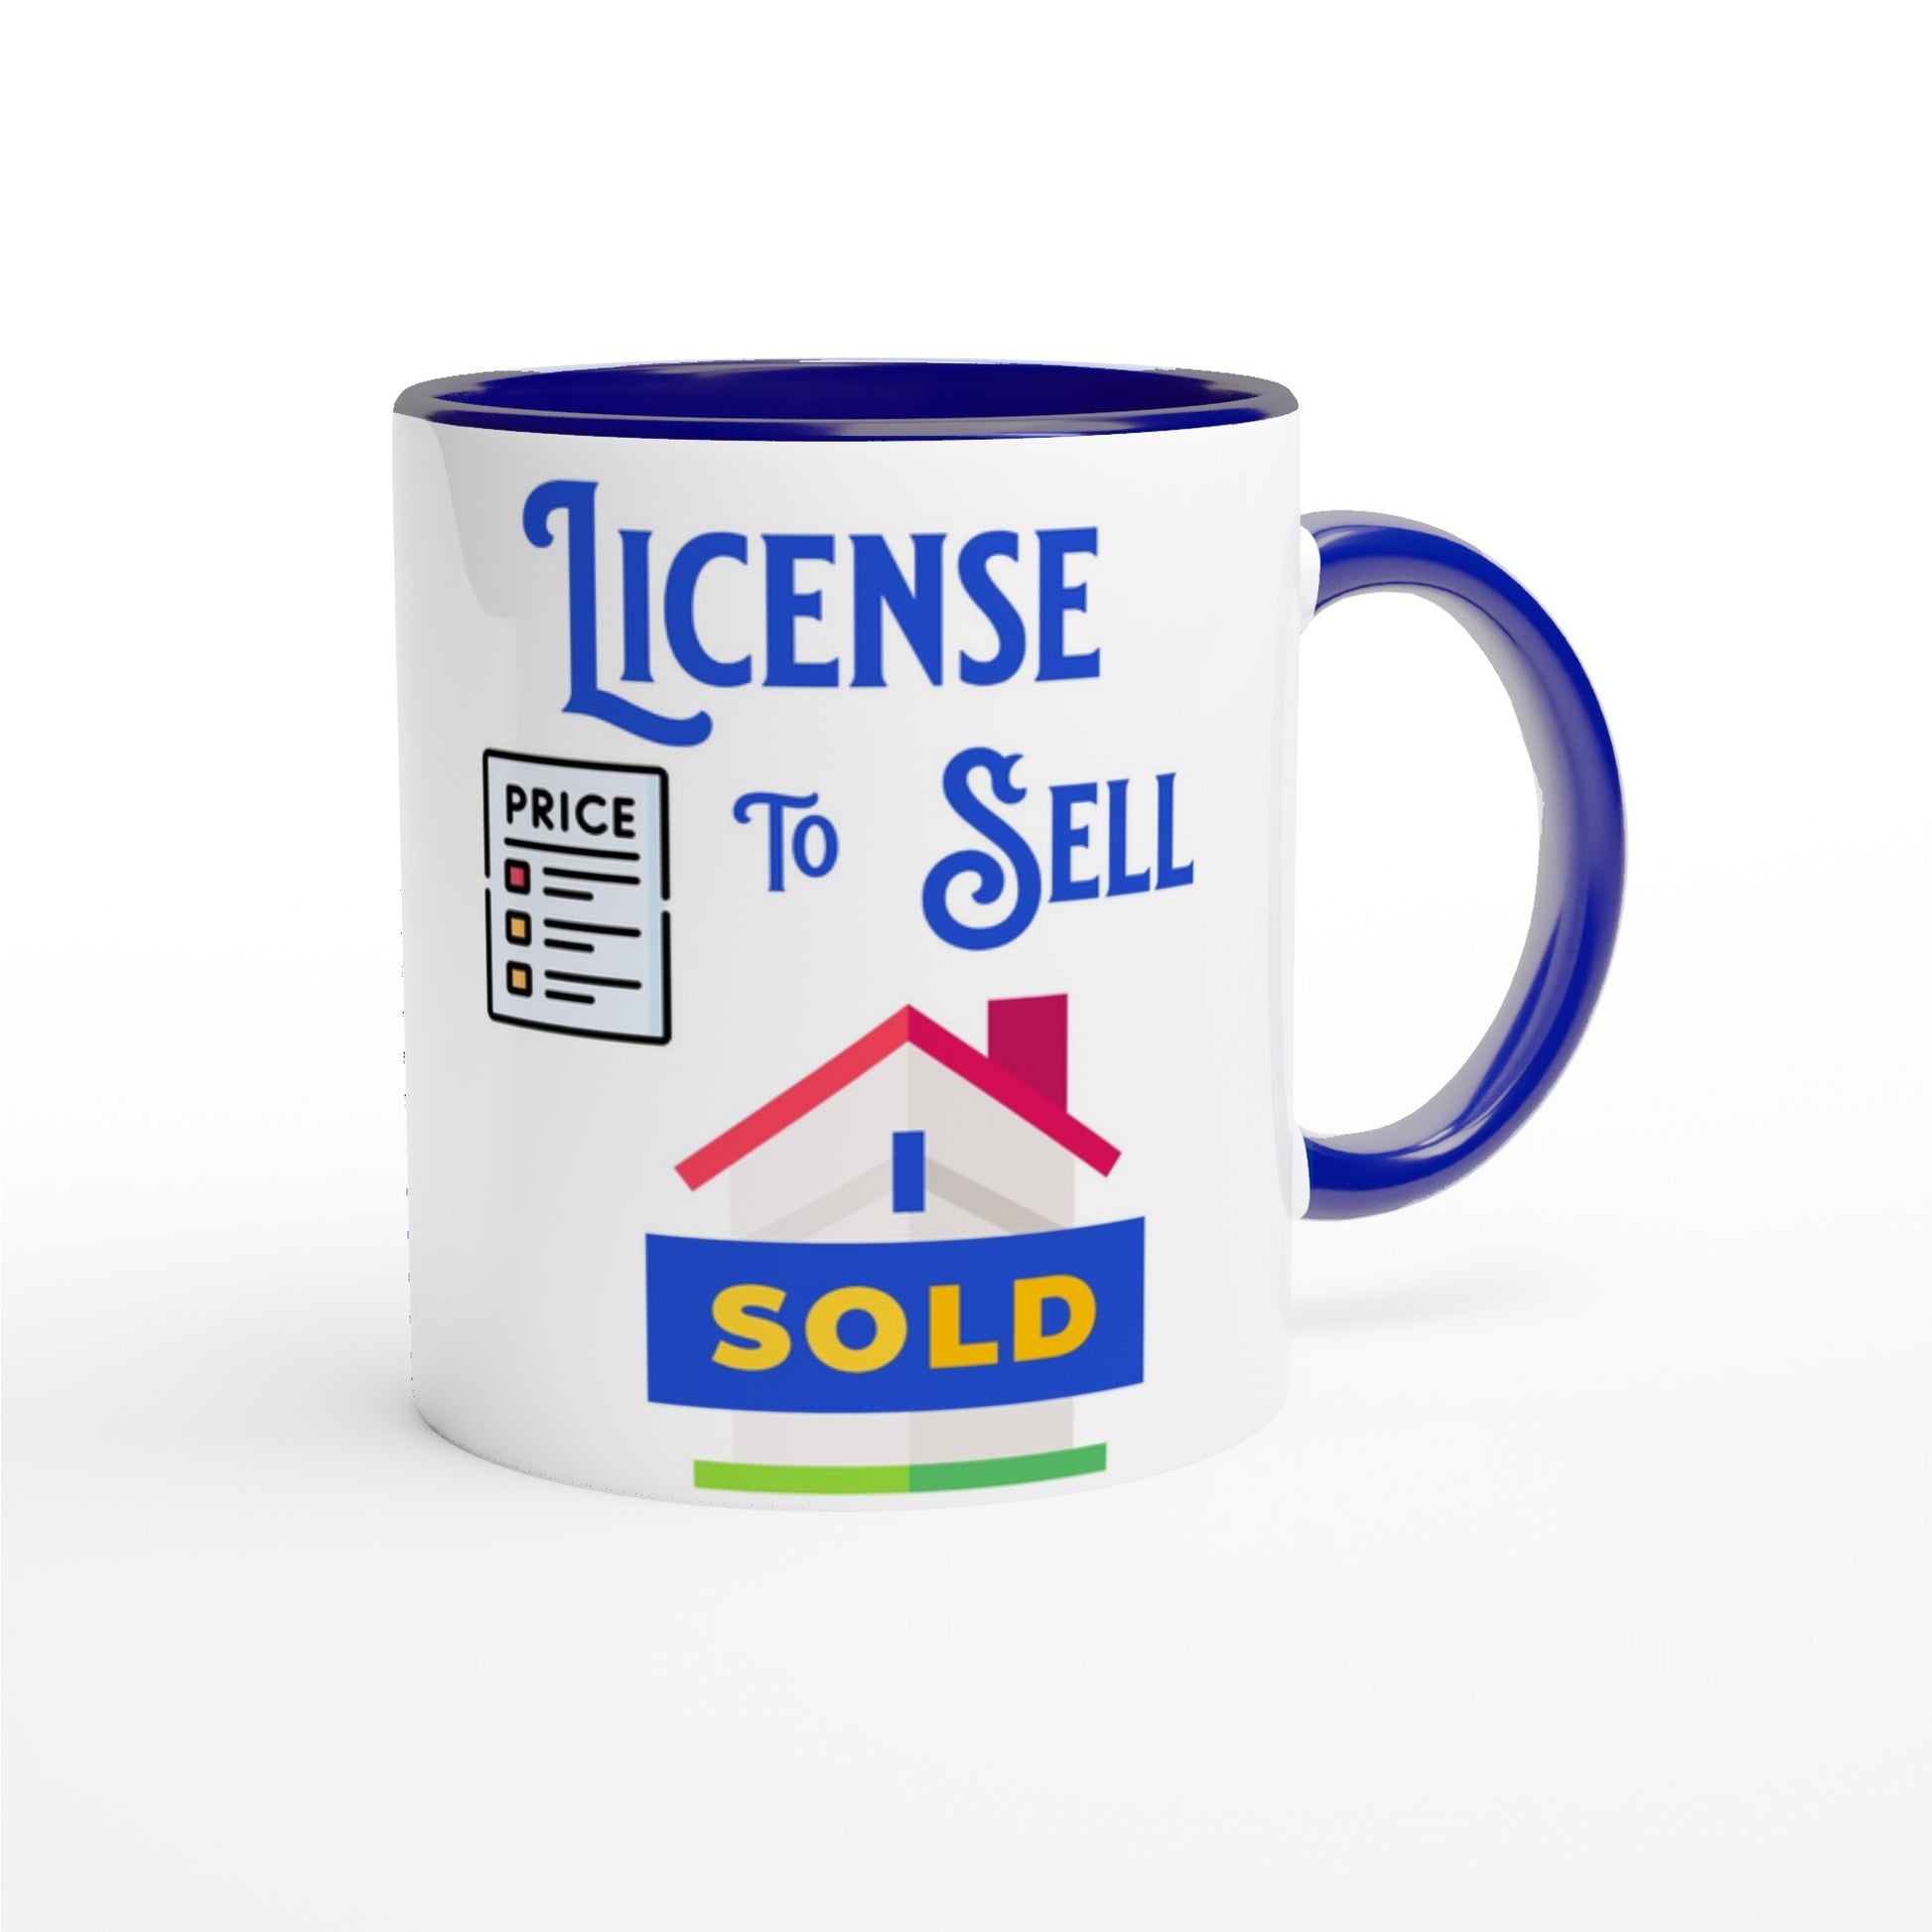 License To Sell 11oz Blue Ceramic Mug by Java Good Coffee